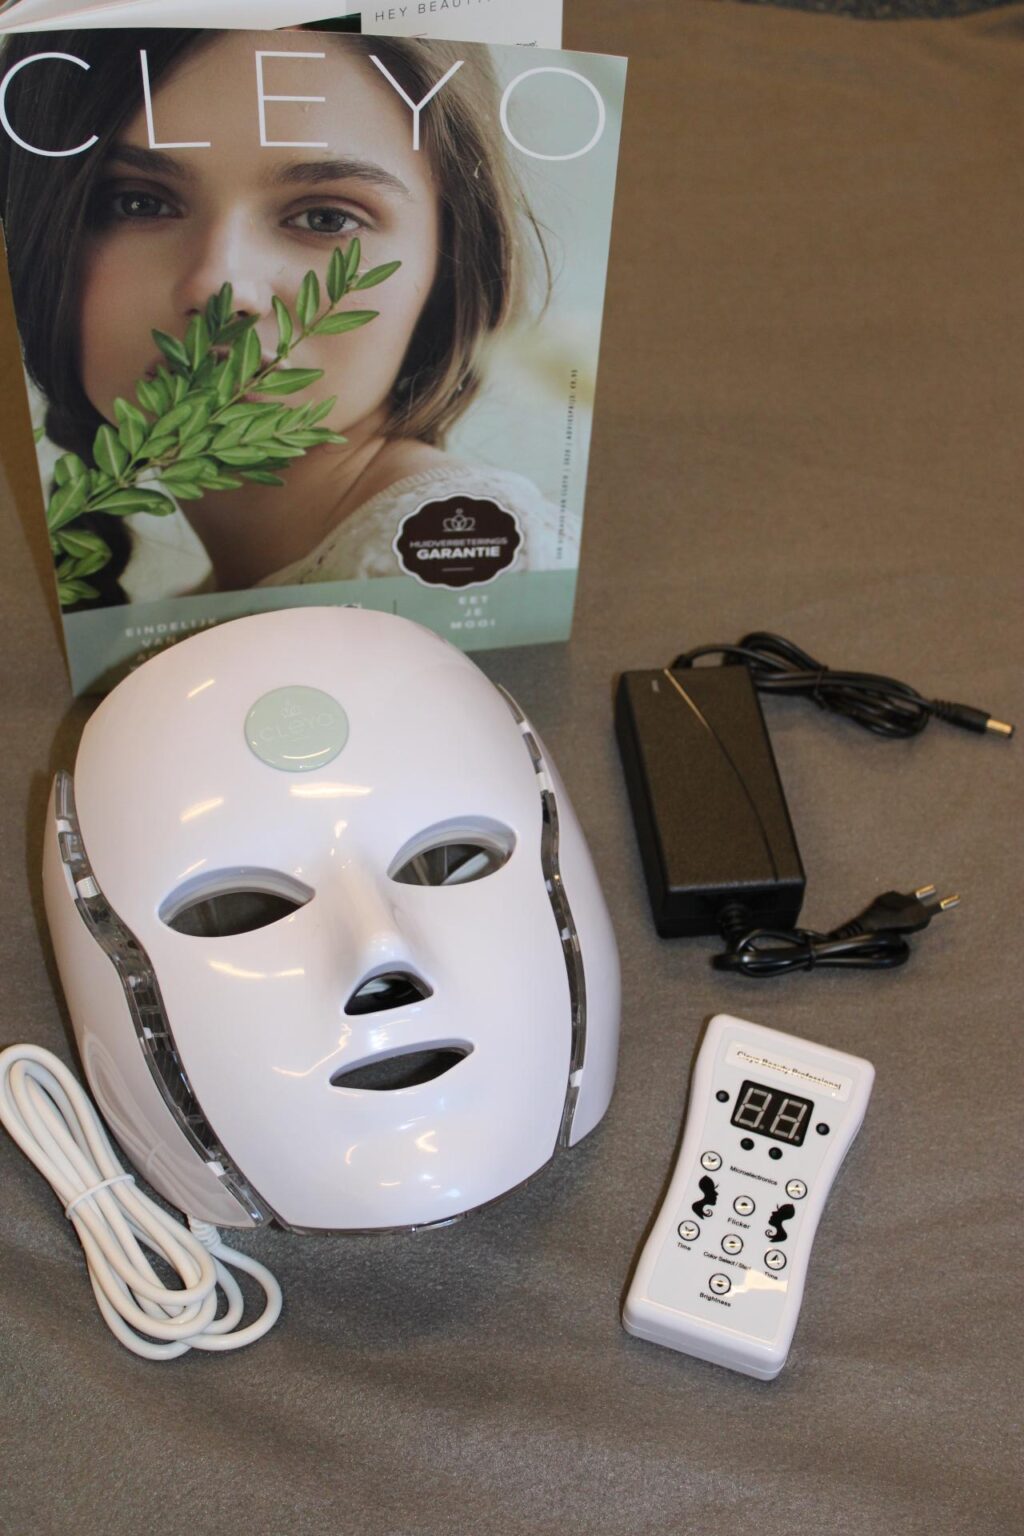 LED mask cleyo beauty products